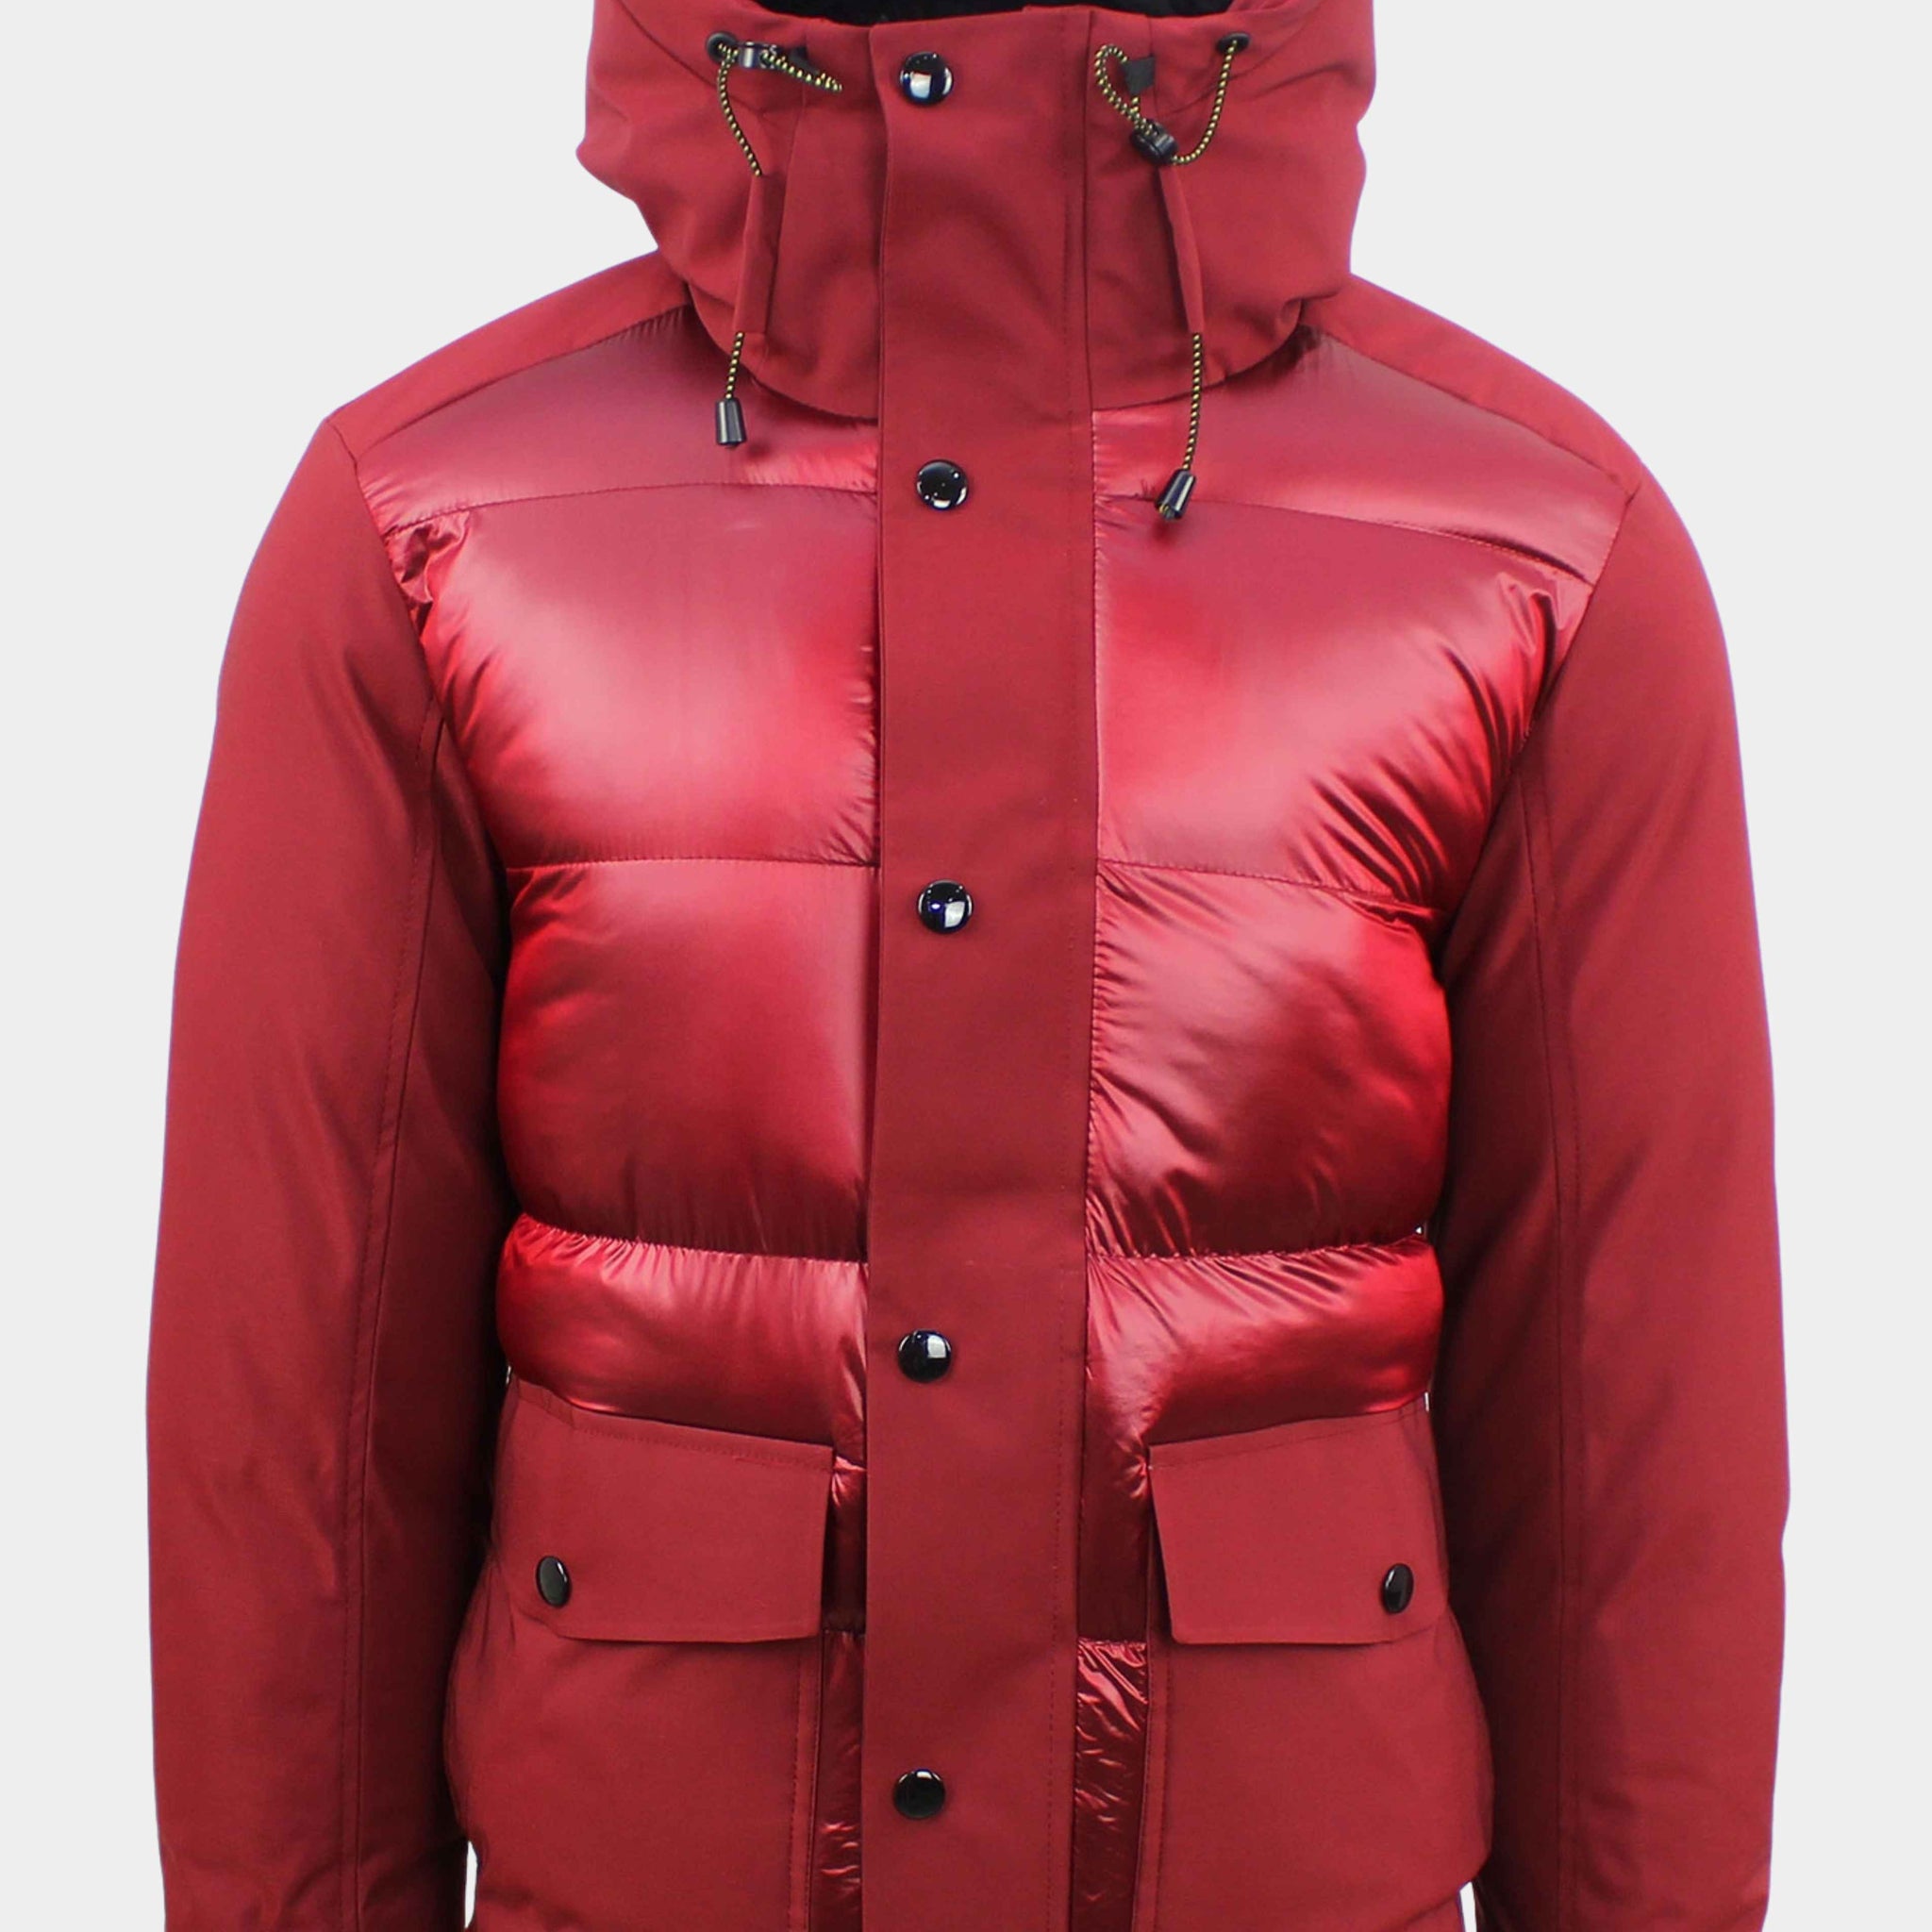 Combined jacket 300 grams burgundy